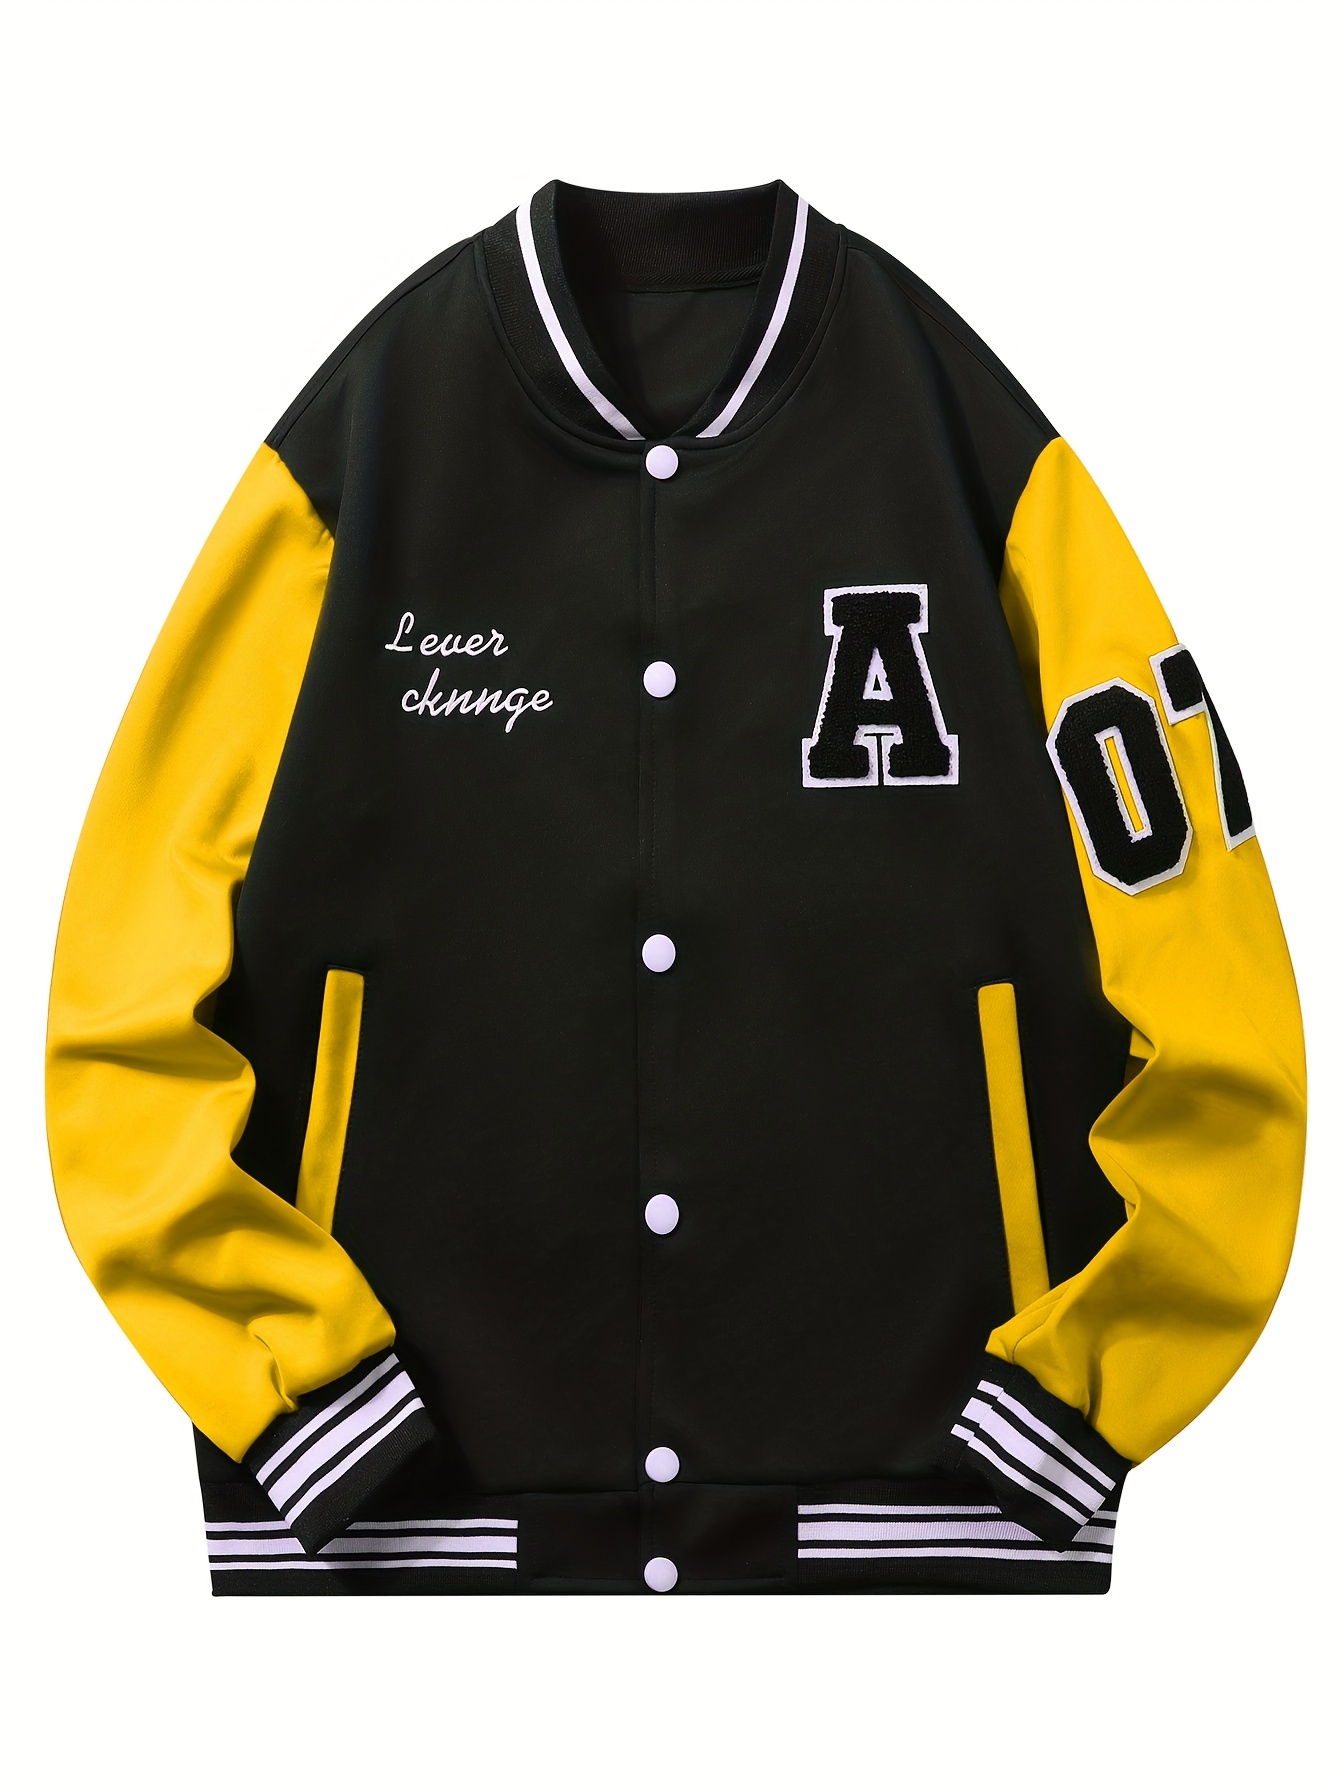 Black And Red Letterman Jacket Men - High School Varsity Mens Baseball  Jacket